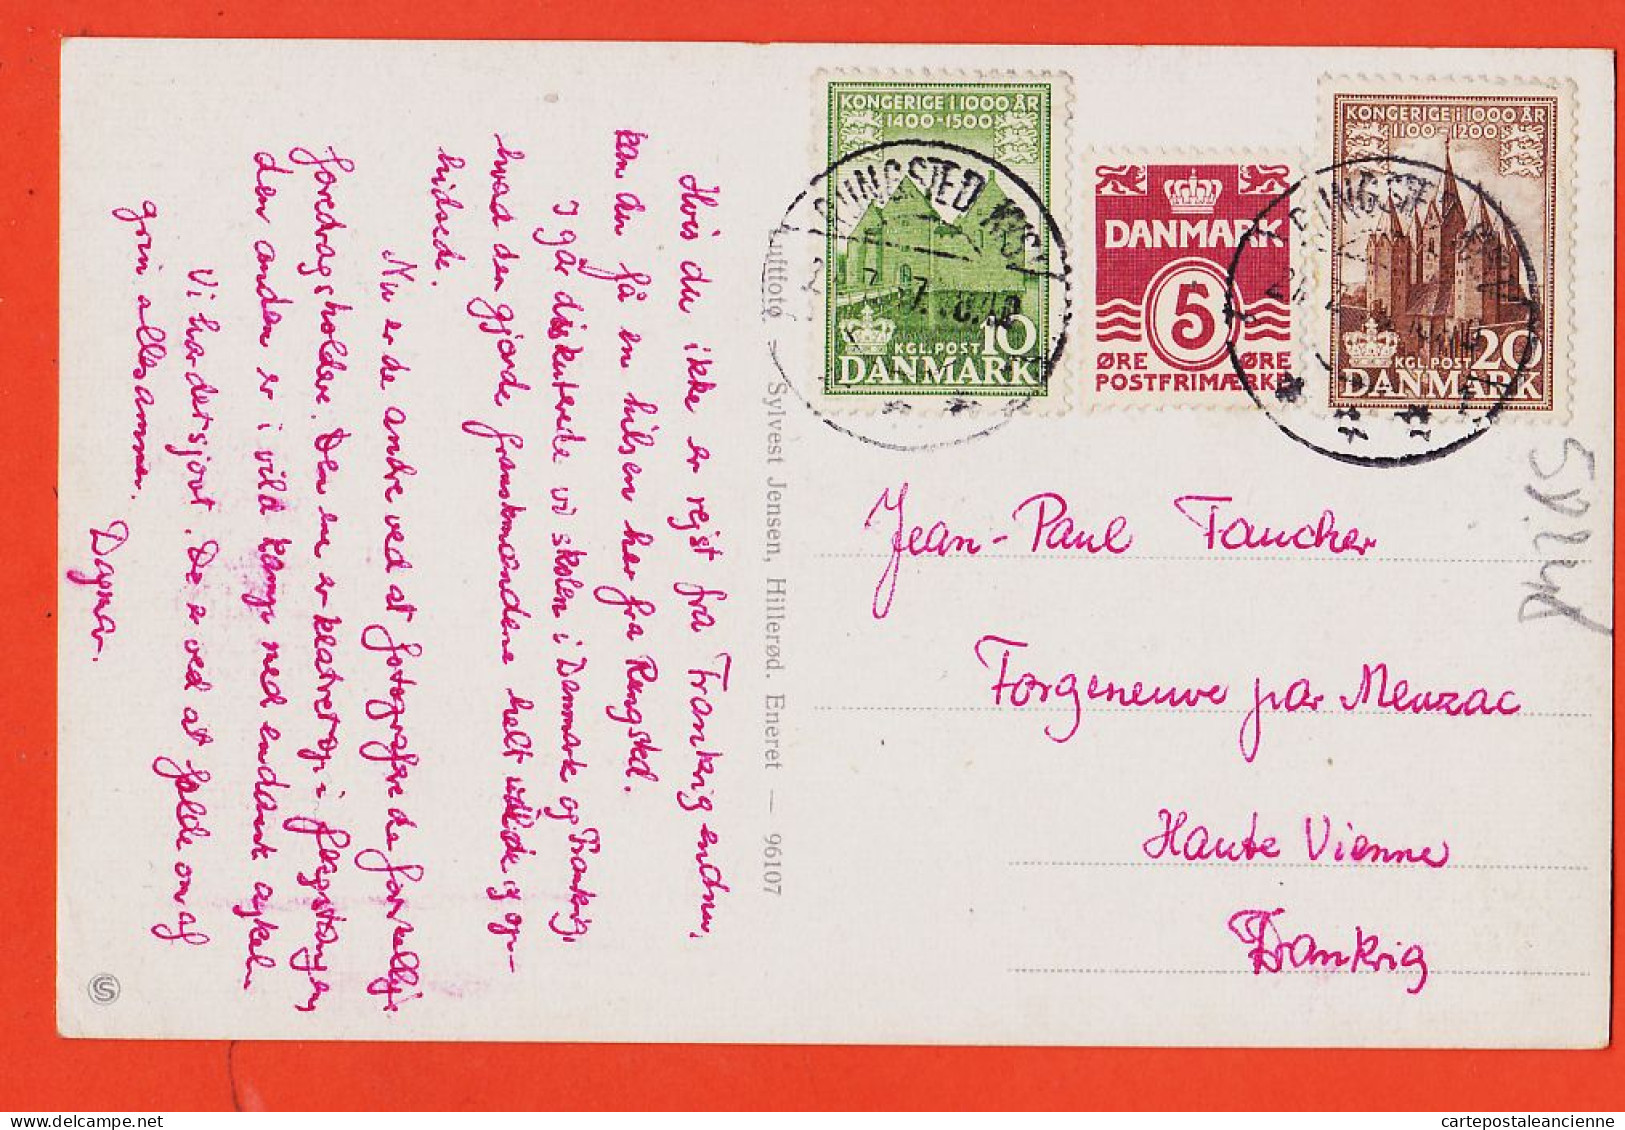 04661 / Rare RUNGSTED Danmark 1957 à Jean-Paul FAUCHER Forgeneuve Meuzac Haute-Vienne LUFTFOTO Sylvest JENSEN Hillirod - Danemark